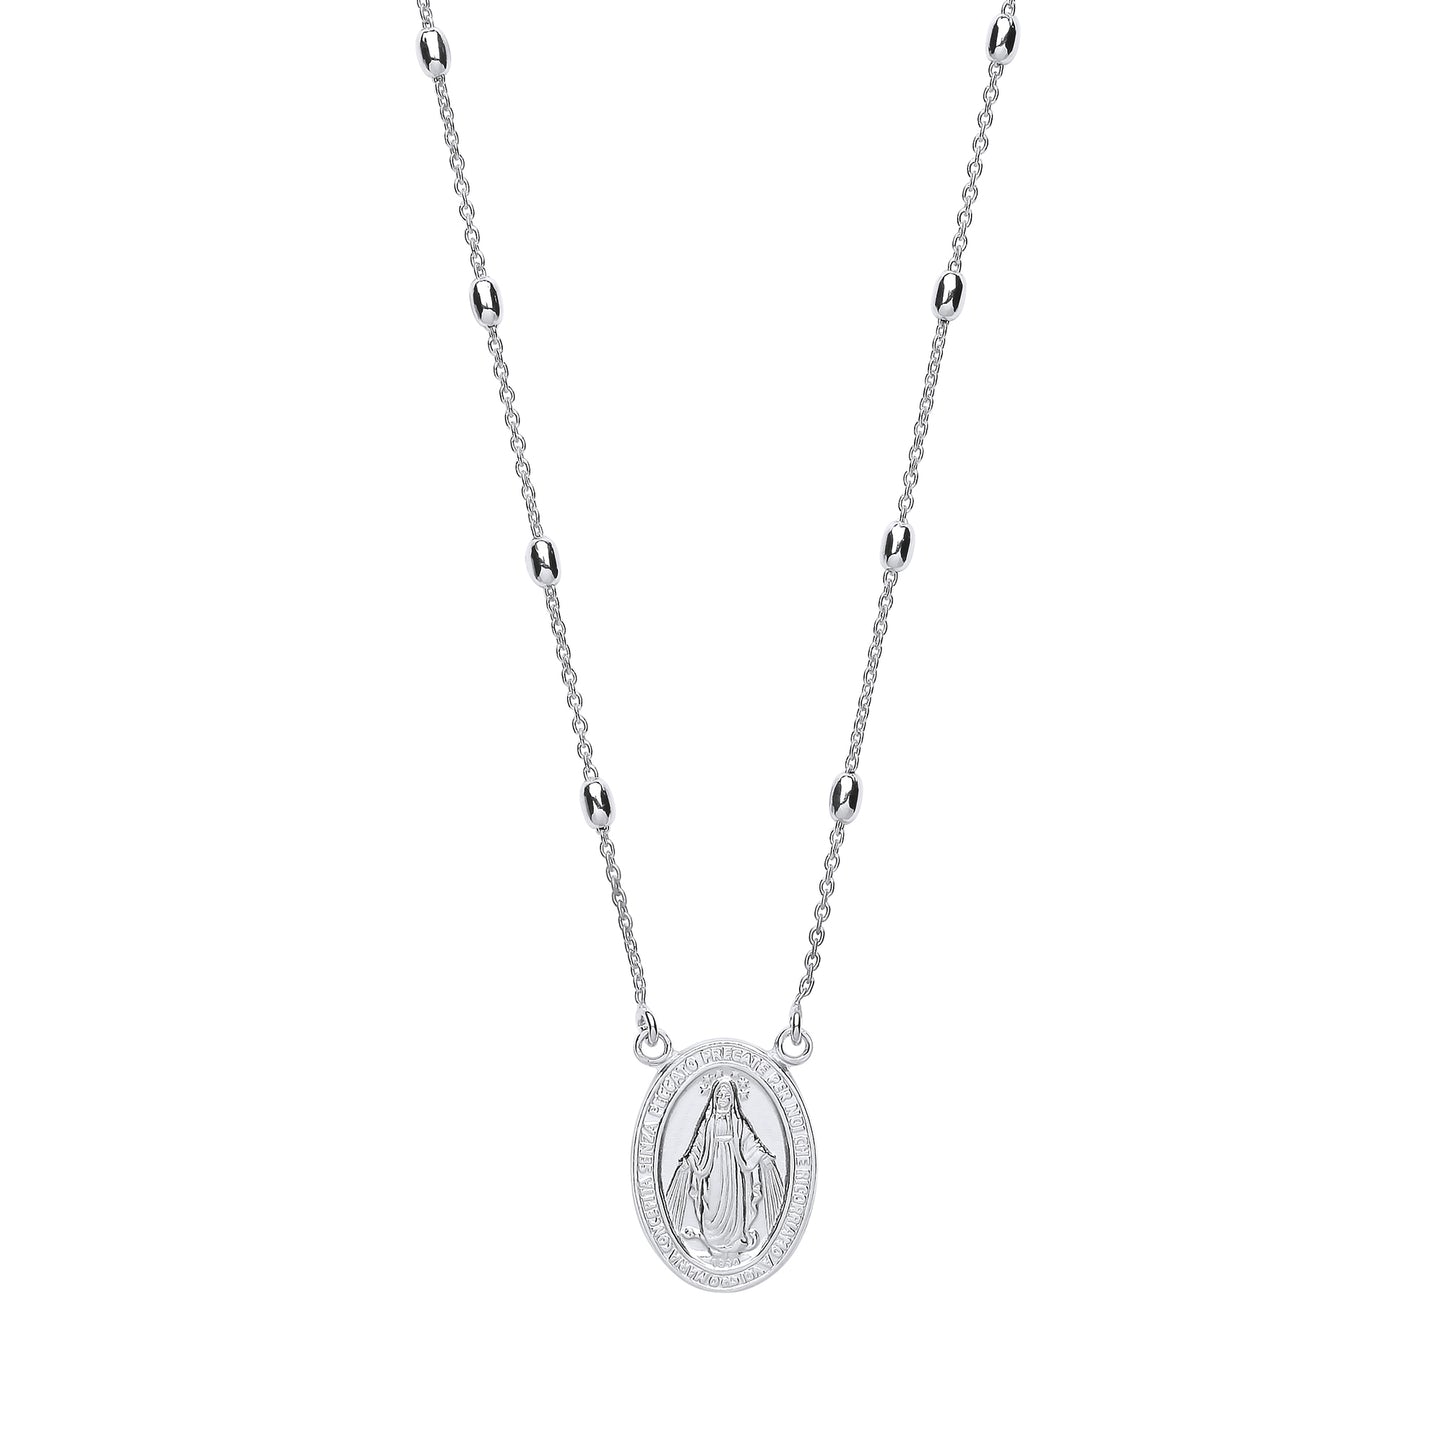 Silver  Religious Medallion Bead Necklace 16 inch - GVK288